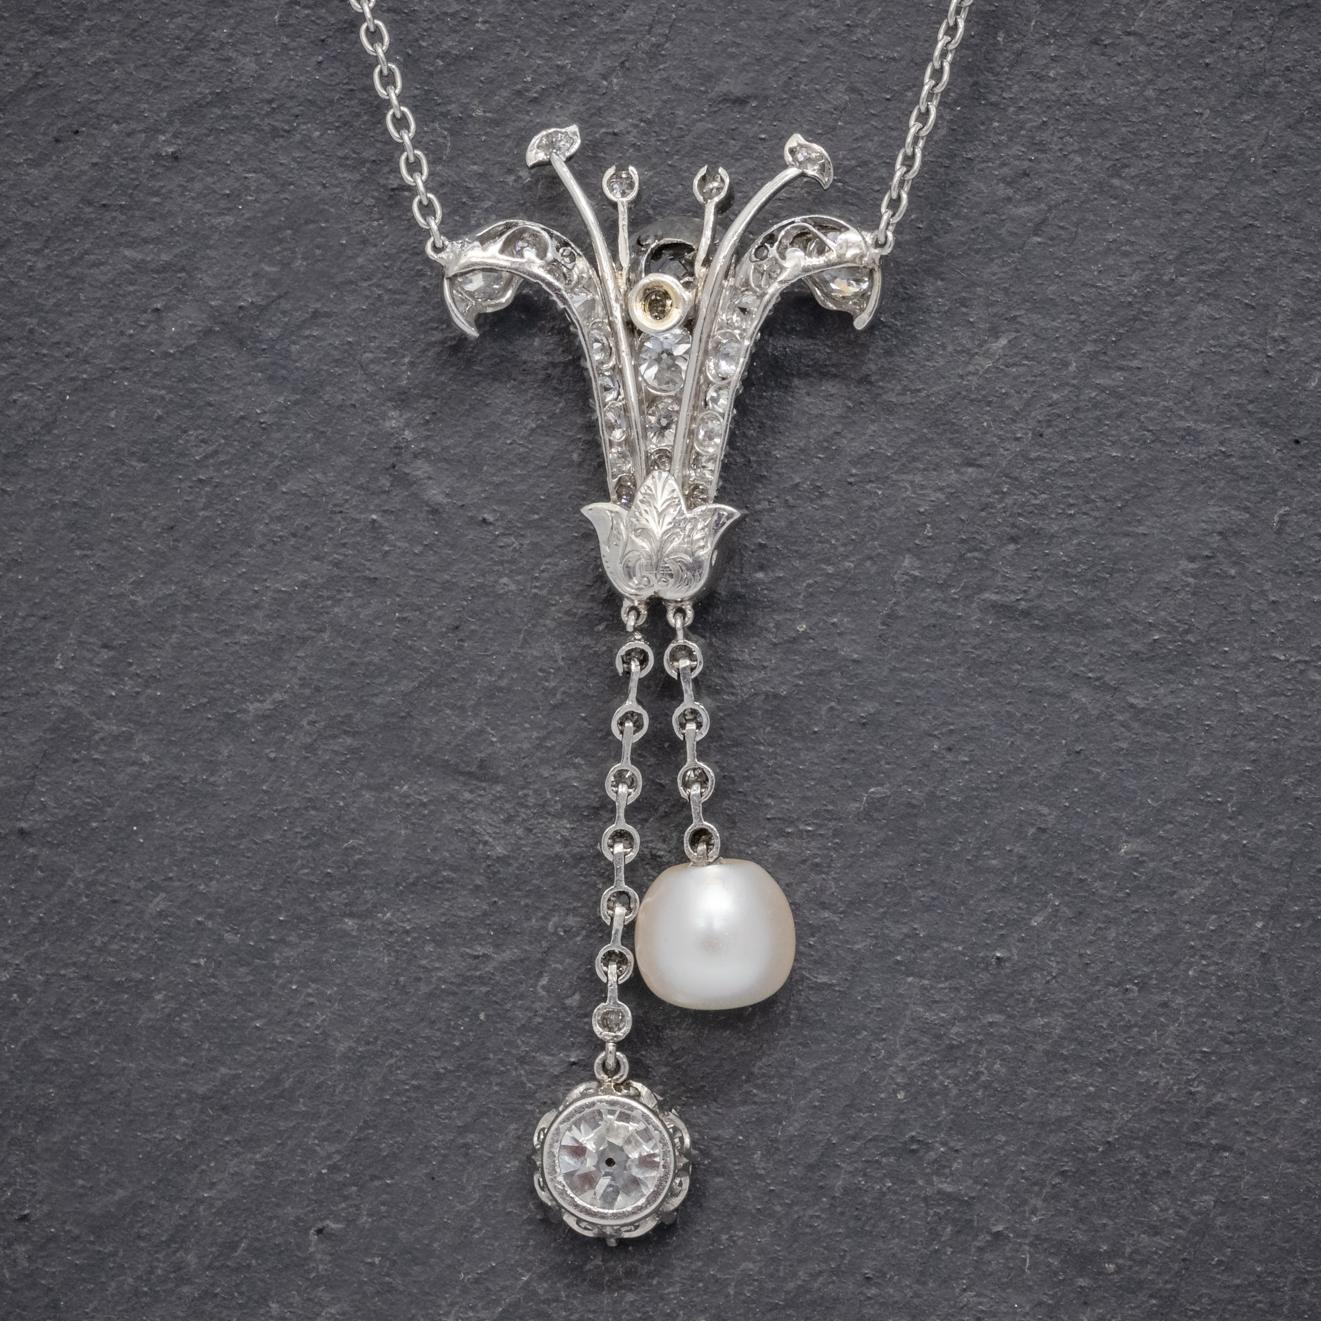 art deco lavaliere in white gold with a diamond pendant.